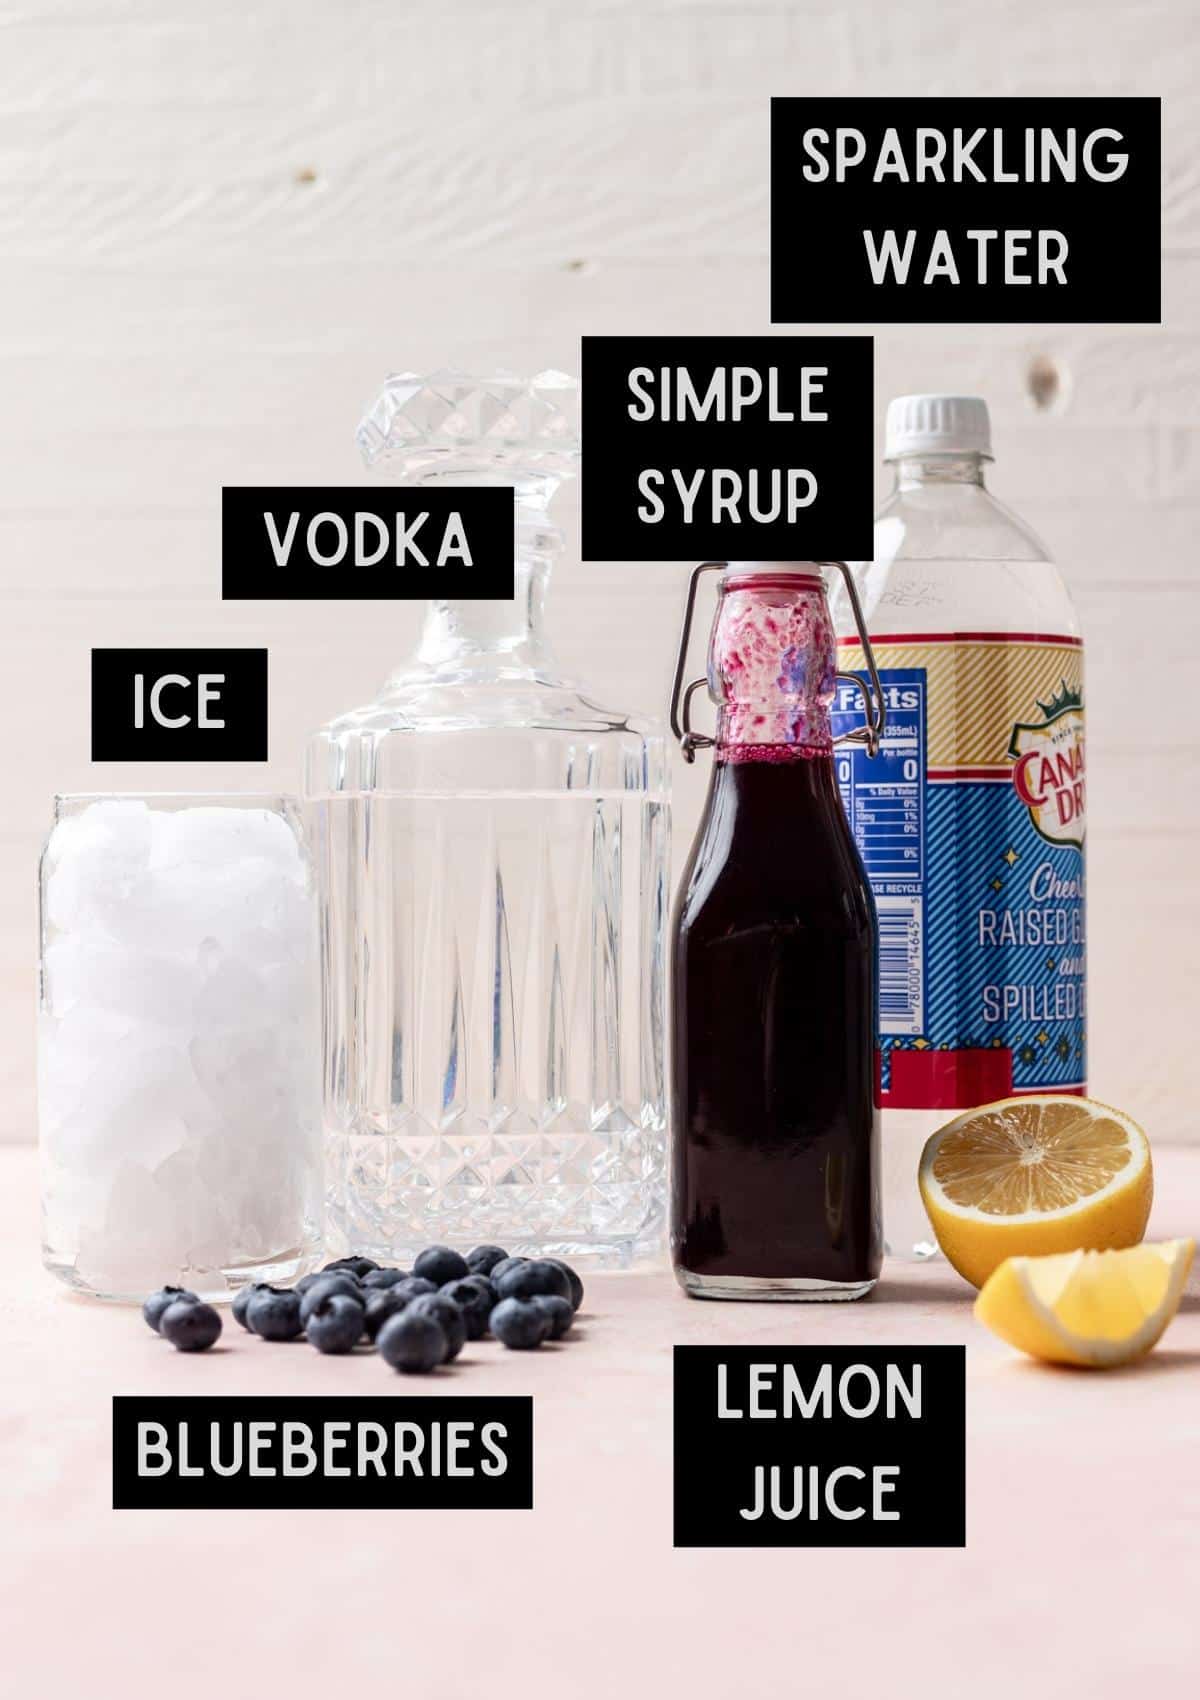 Labelled ingredients for blueberry vodka lemonade (see recipe for details).